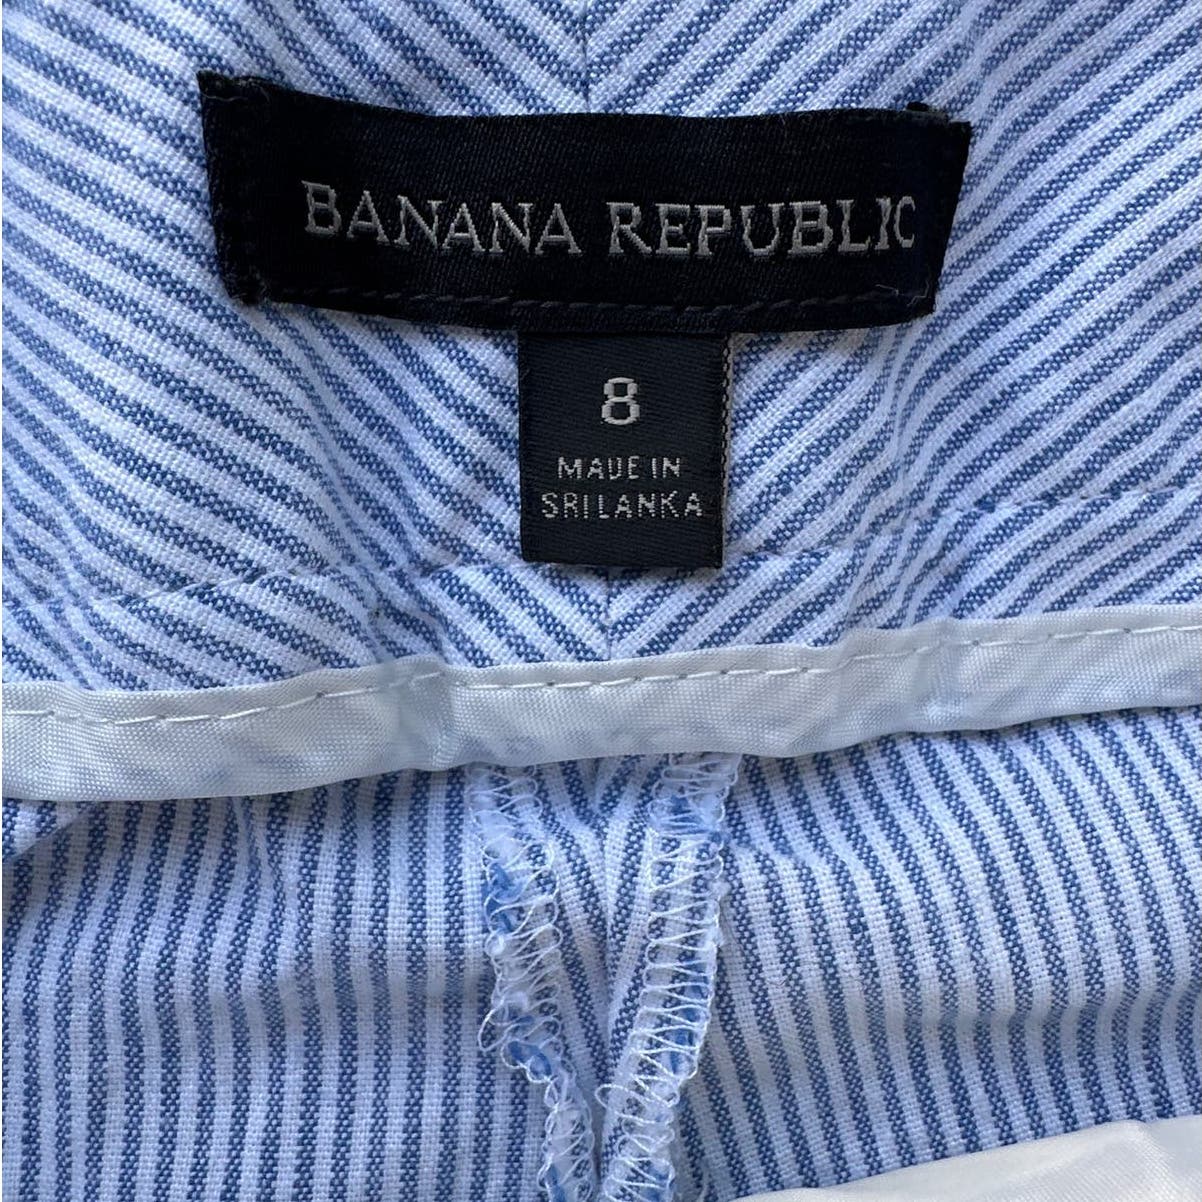 Banana Republic Linen and Cotton Blend Stripped Blue and White Wide Leg Pants Sz 8